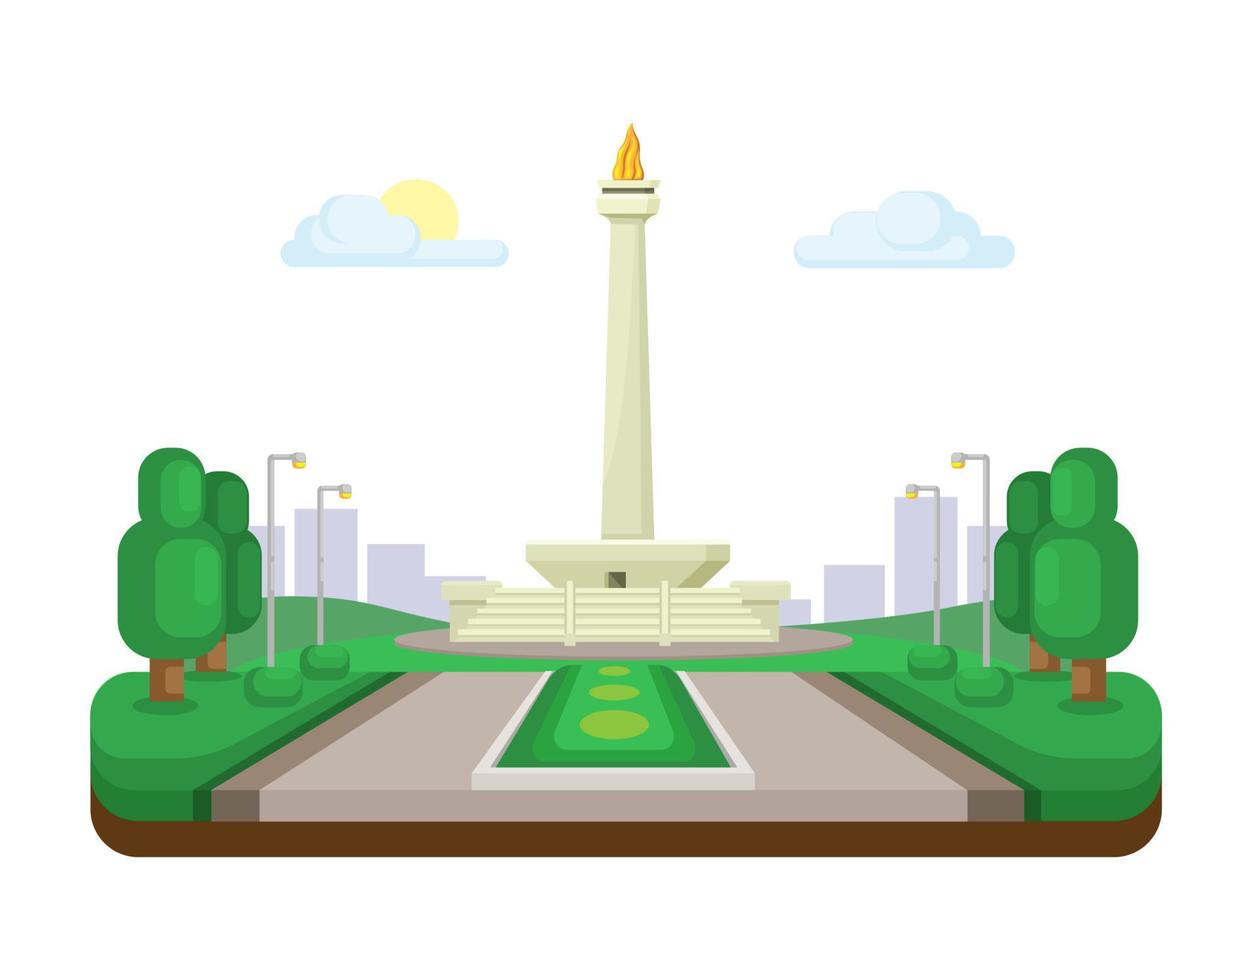 Monas monument at Jakarta Indonesia famous landmark illustration in flat design vector